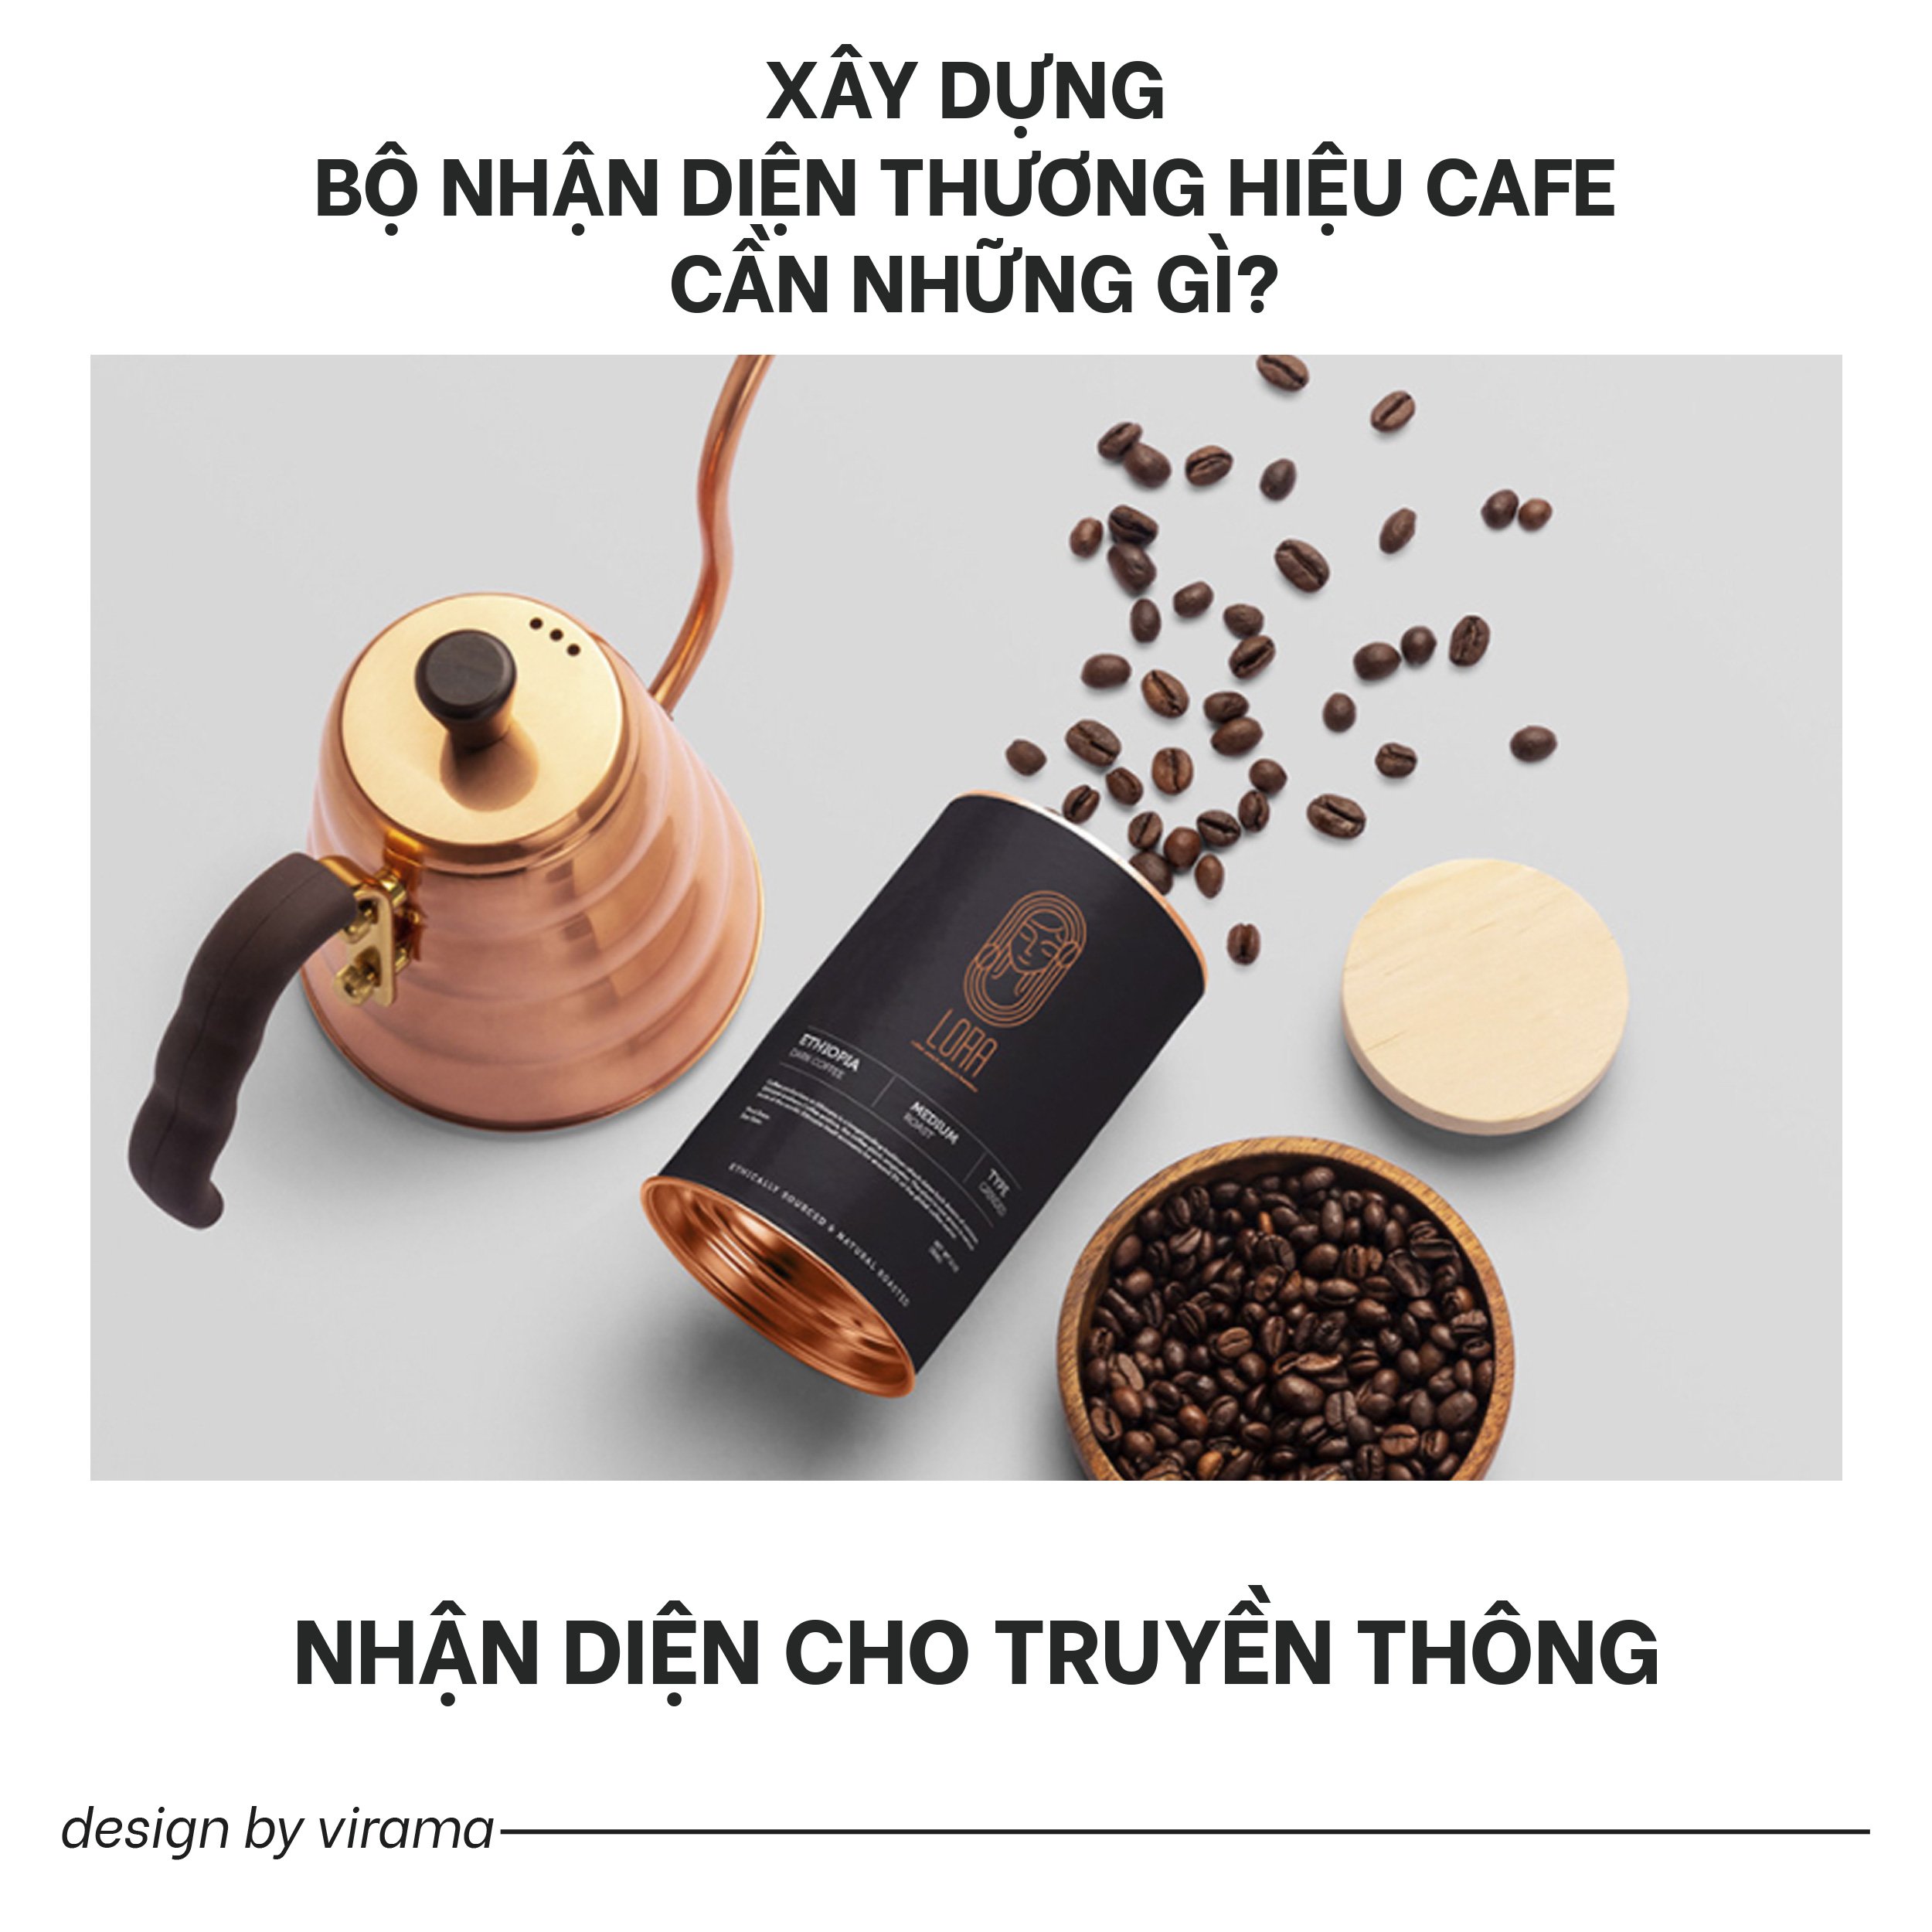 bo-nhan-dien-thuong-hieu-cafe-6